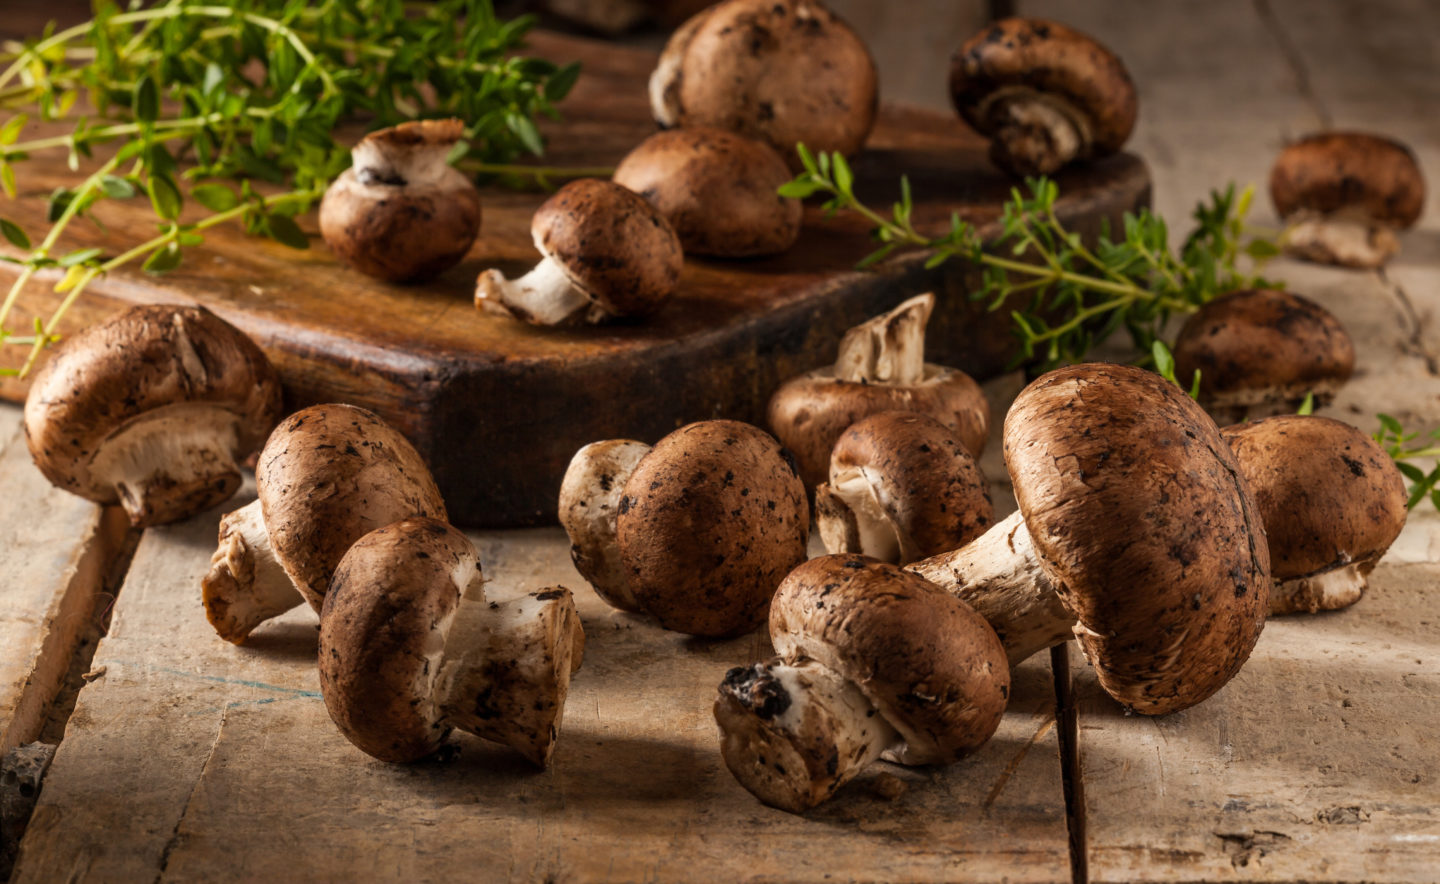 raw portobello mushrooms scattered with dirt